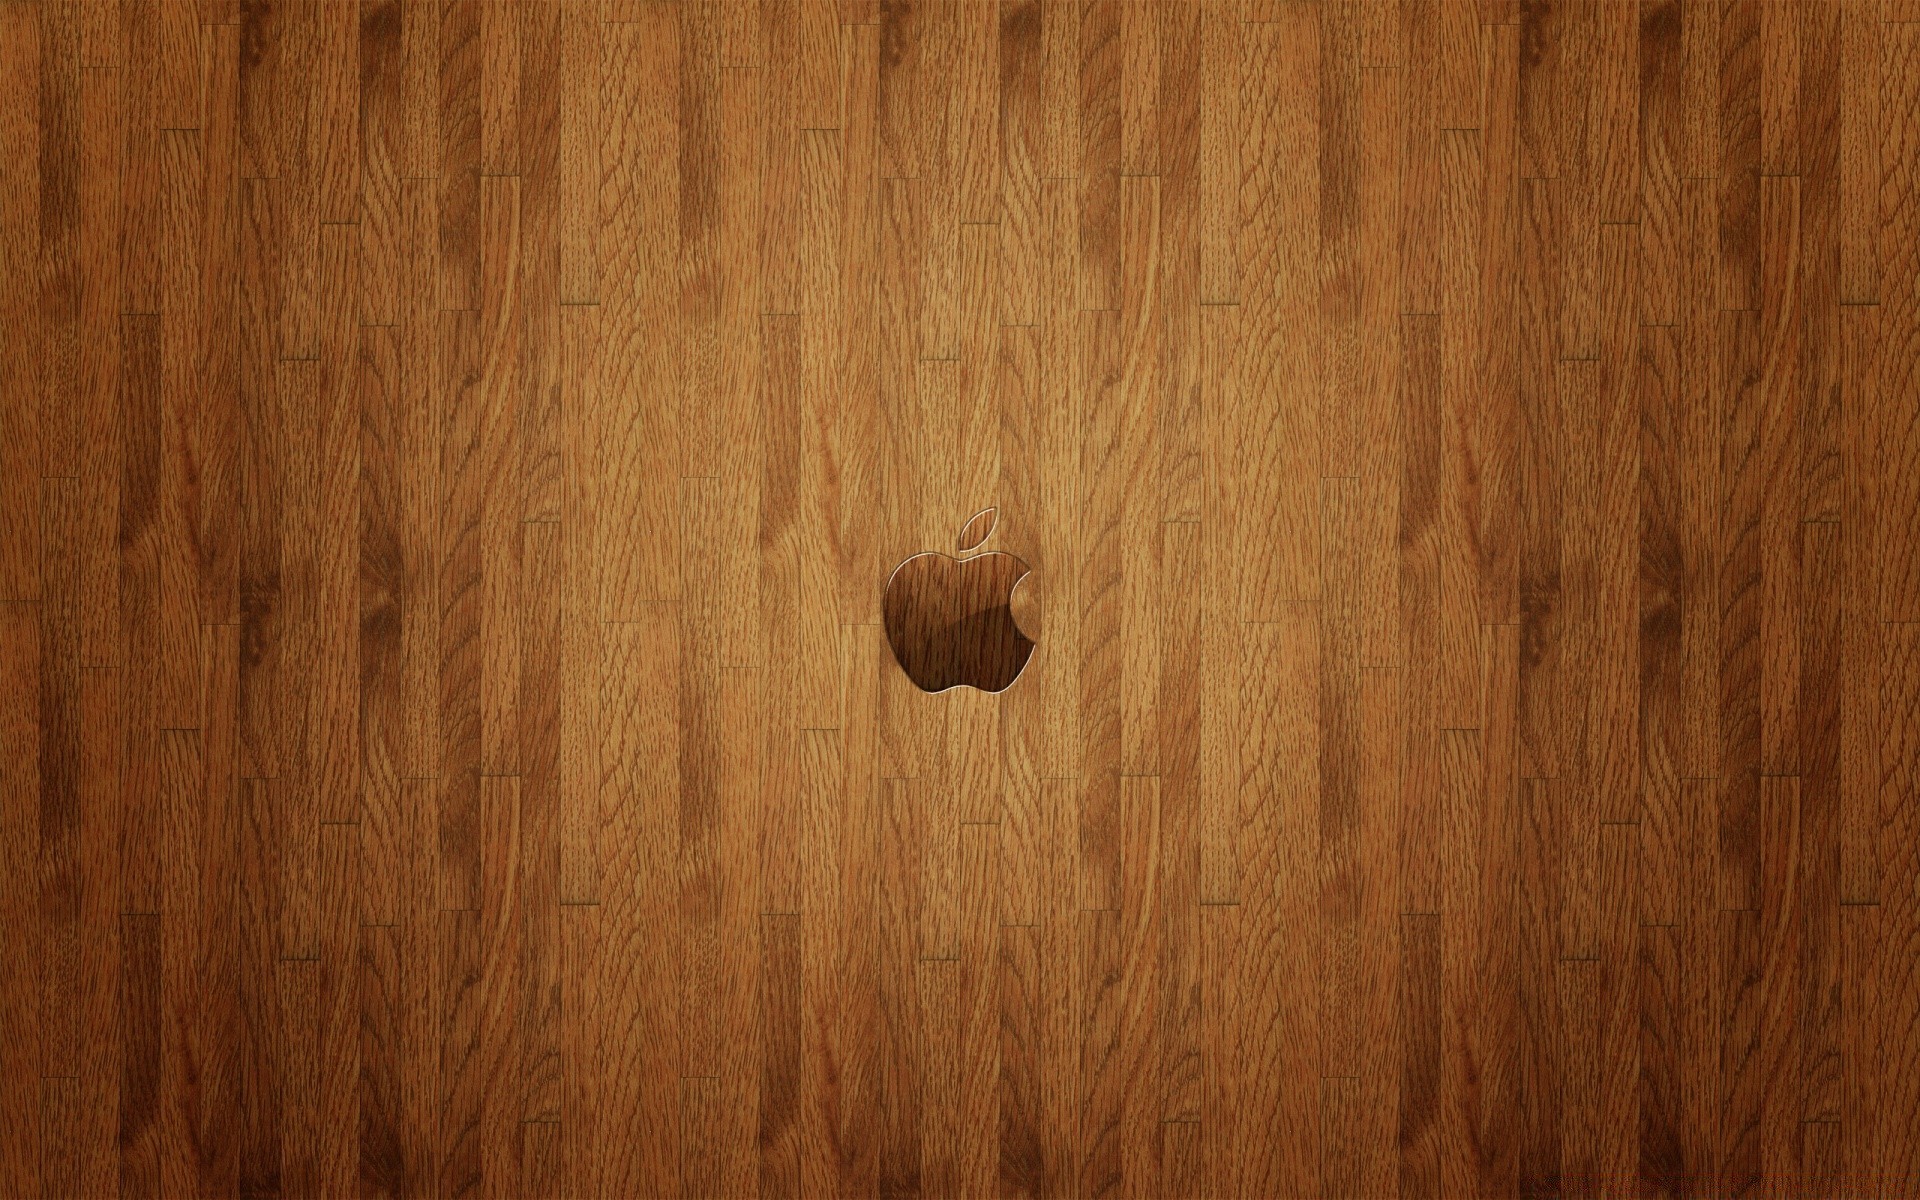 mac wood furniture log floor hardwood rough parquet surface carpentry grain wall wooden fabric texture board oak dark woodgrain pattern